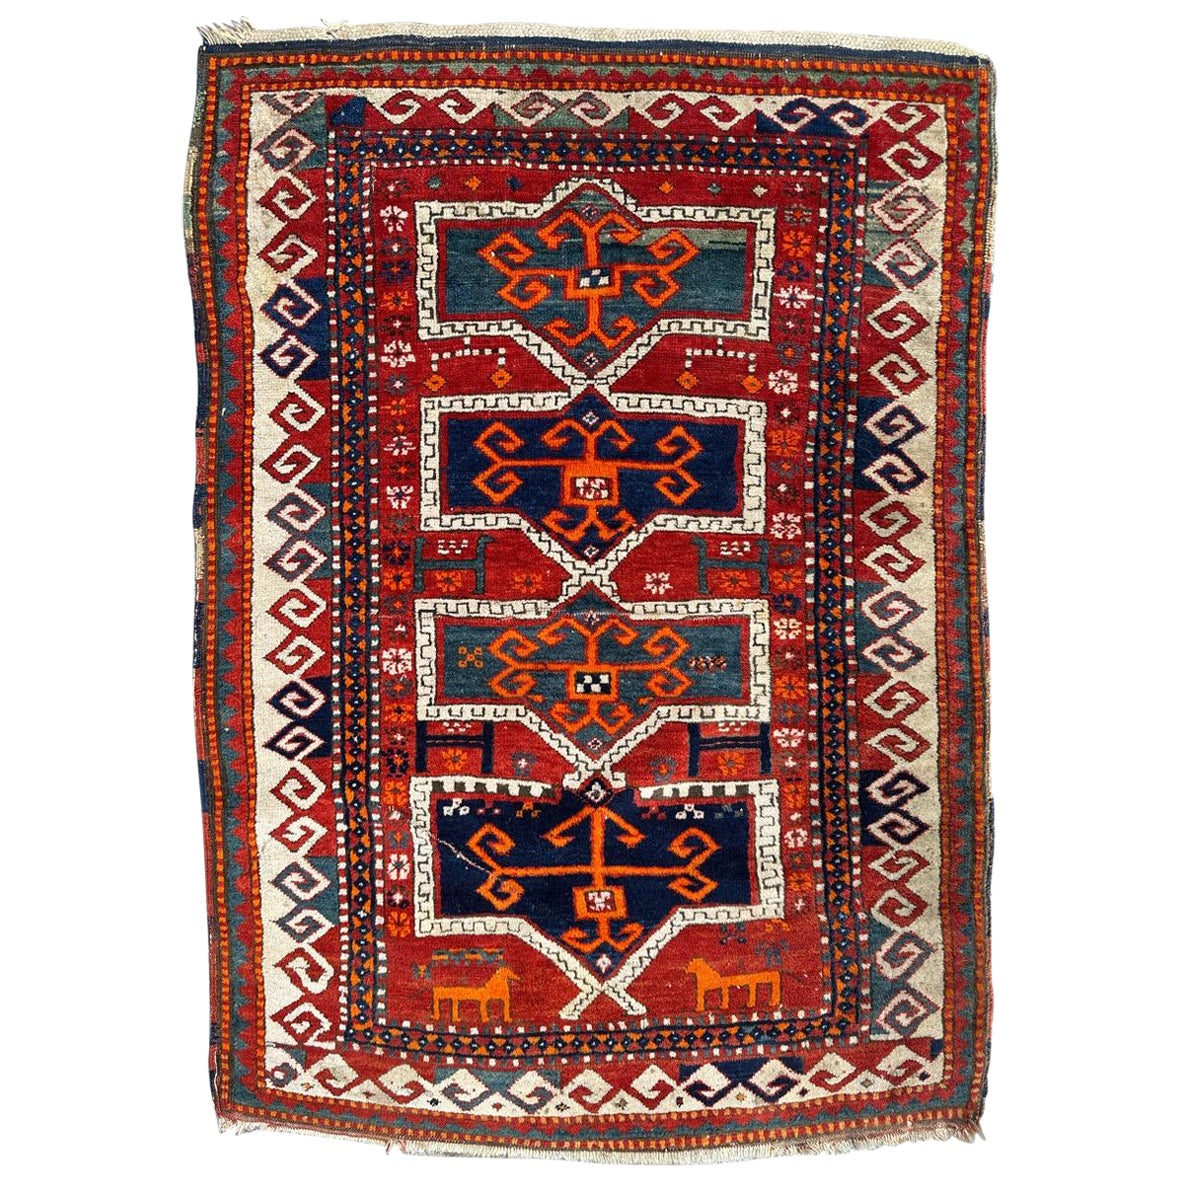 Bobyrug’s Pretty early 20th century Kazak rug 